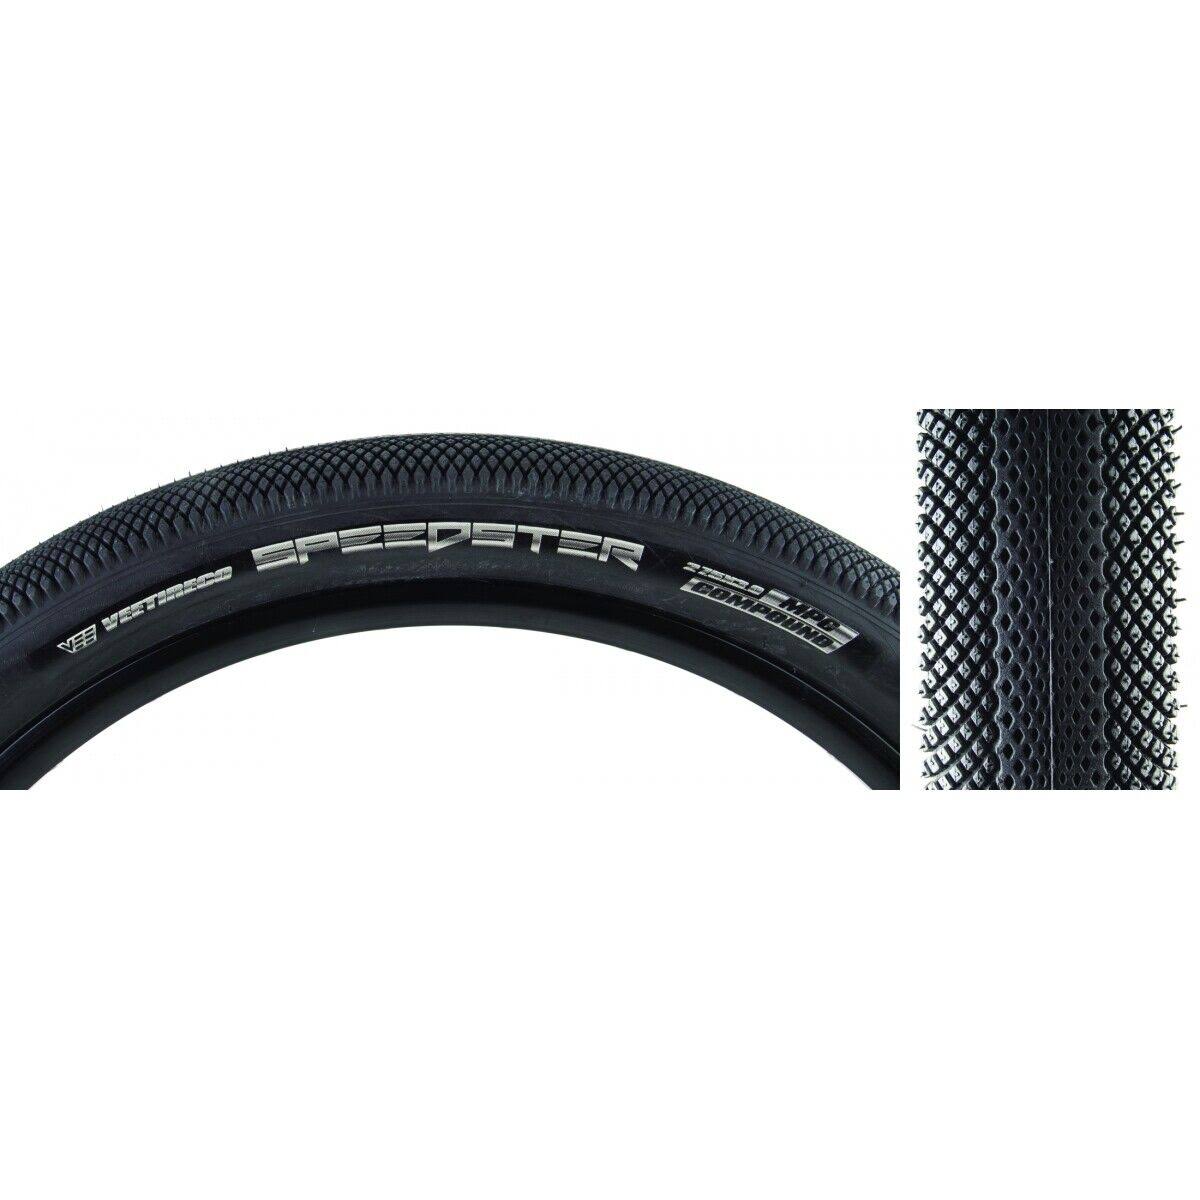 SE Bikes Speedster Tire Beast Mode 27.5x3.0 Black/Black 72 TPI / MPC